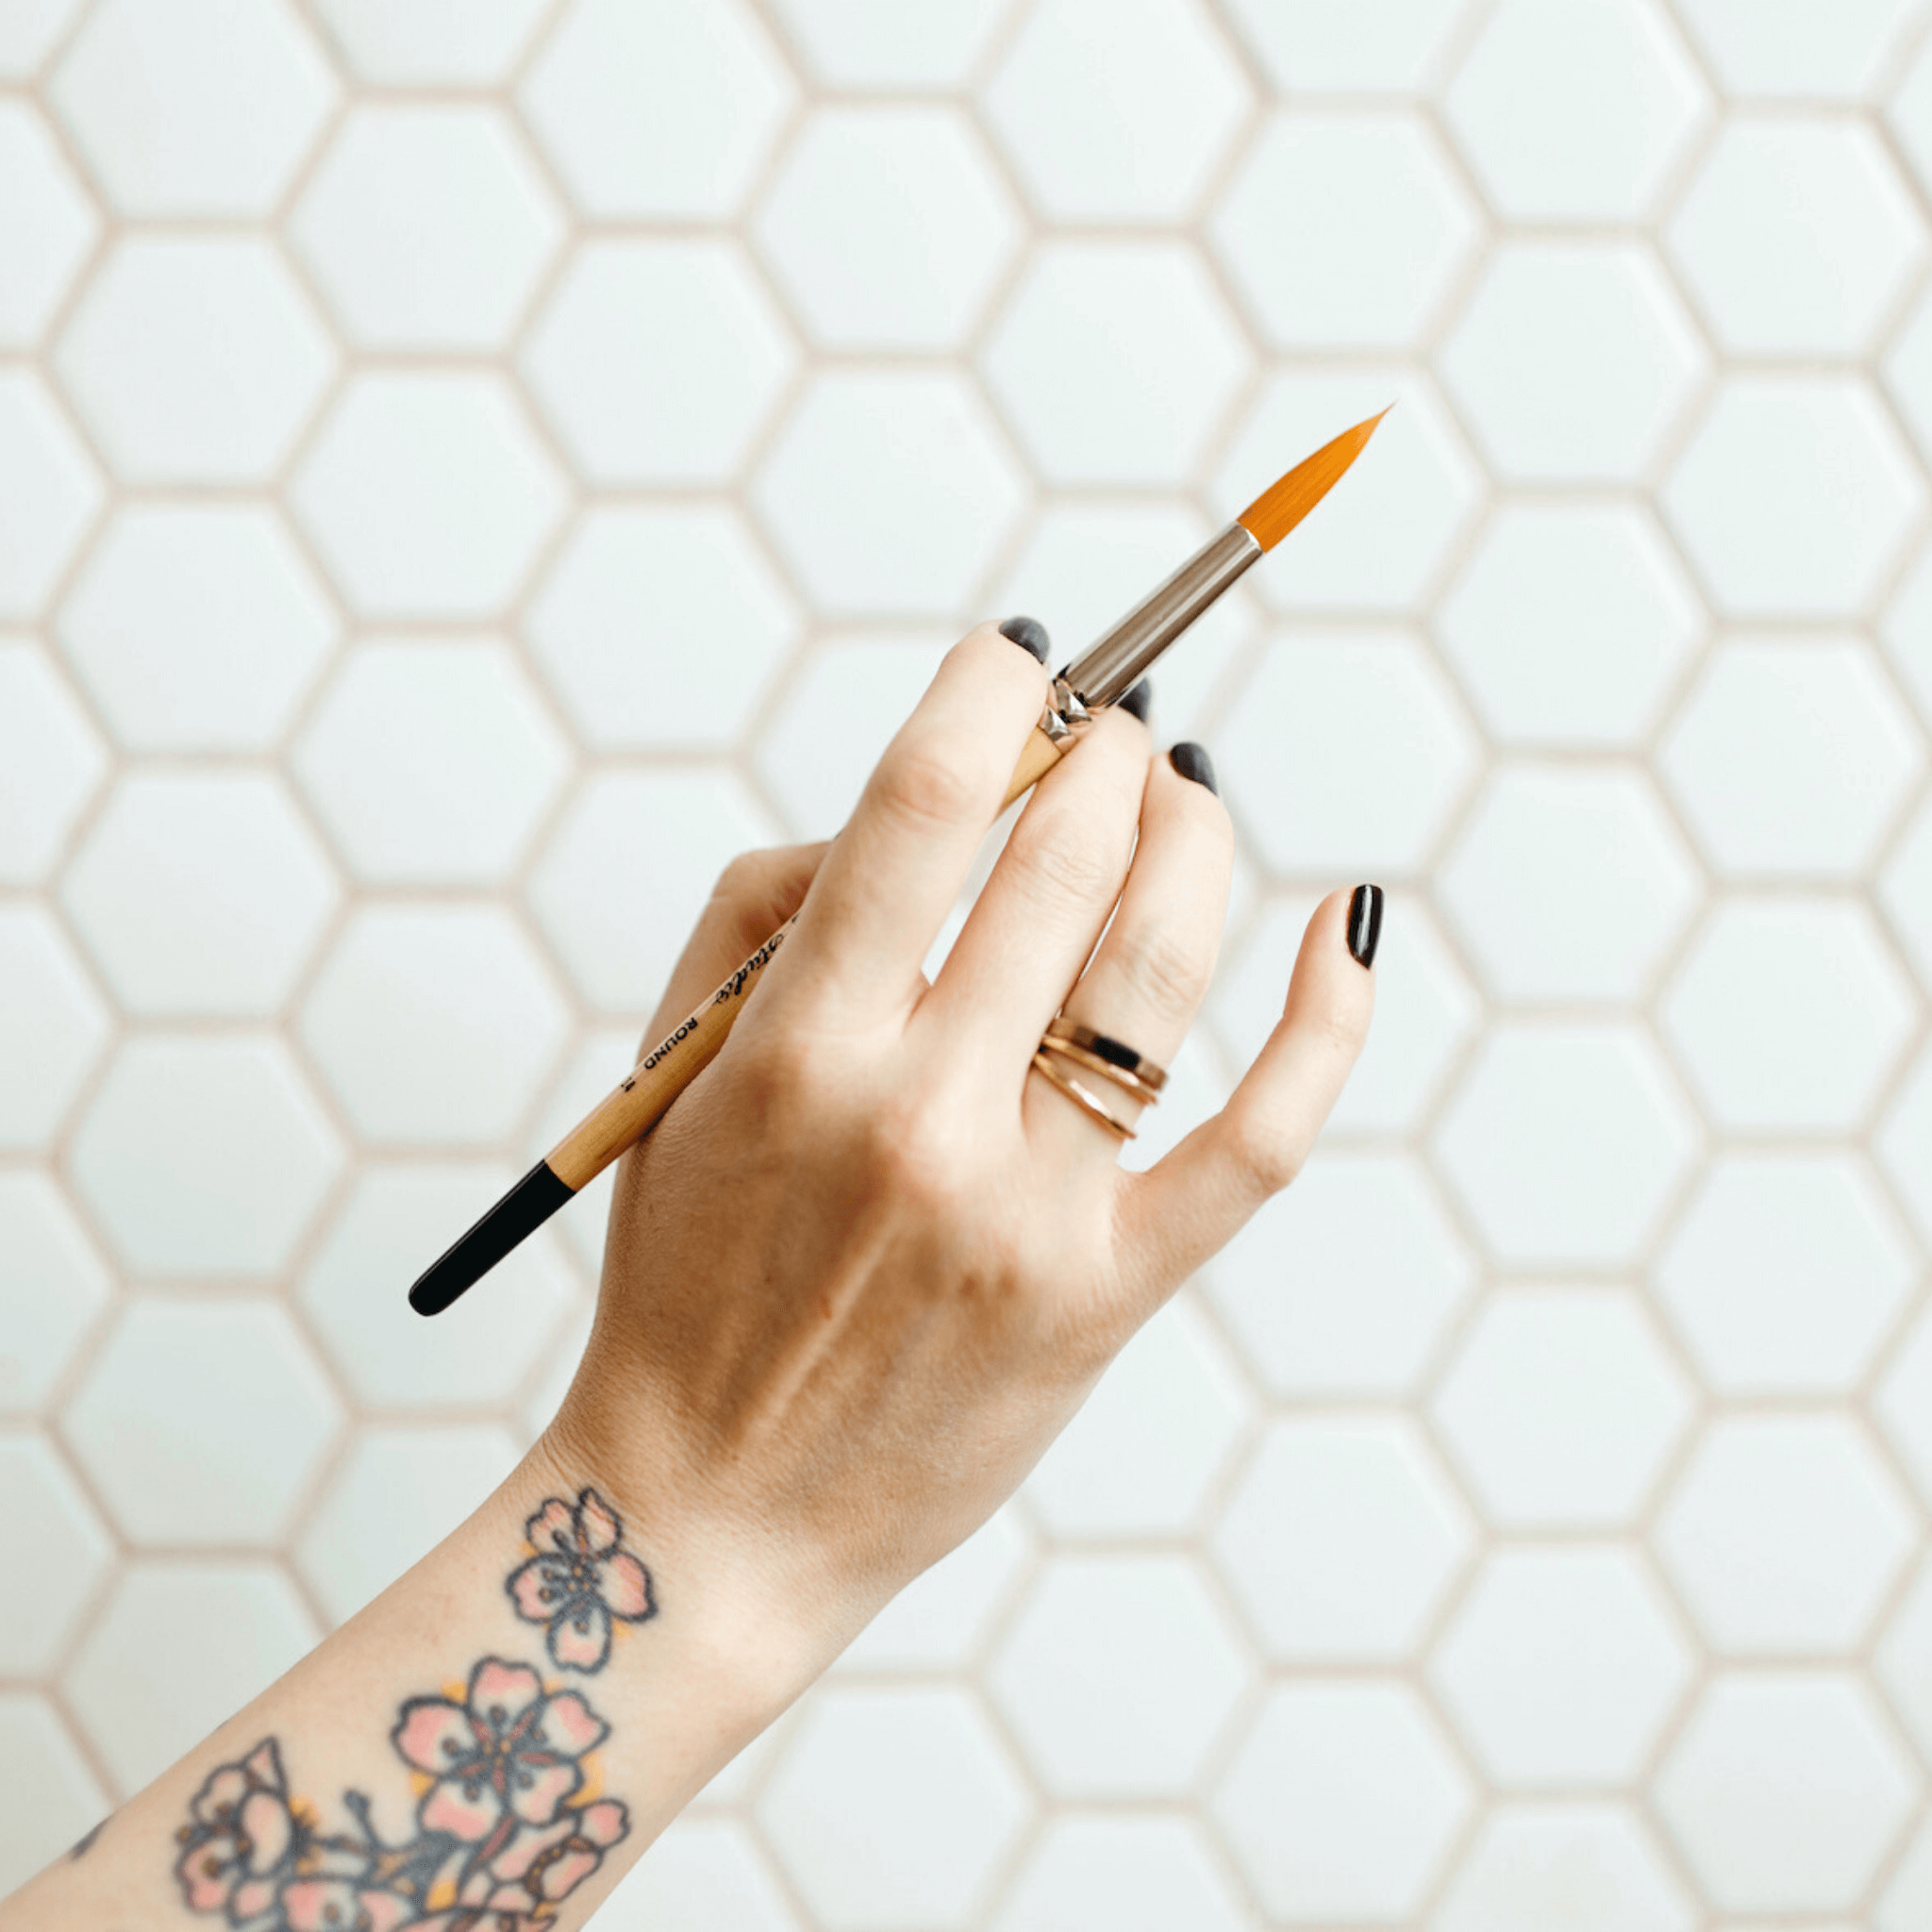 A hand elegantly holding a paintbrush